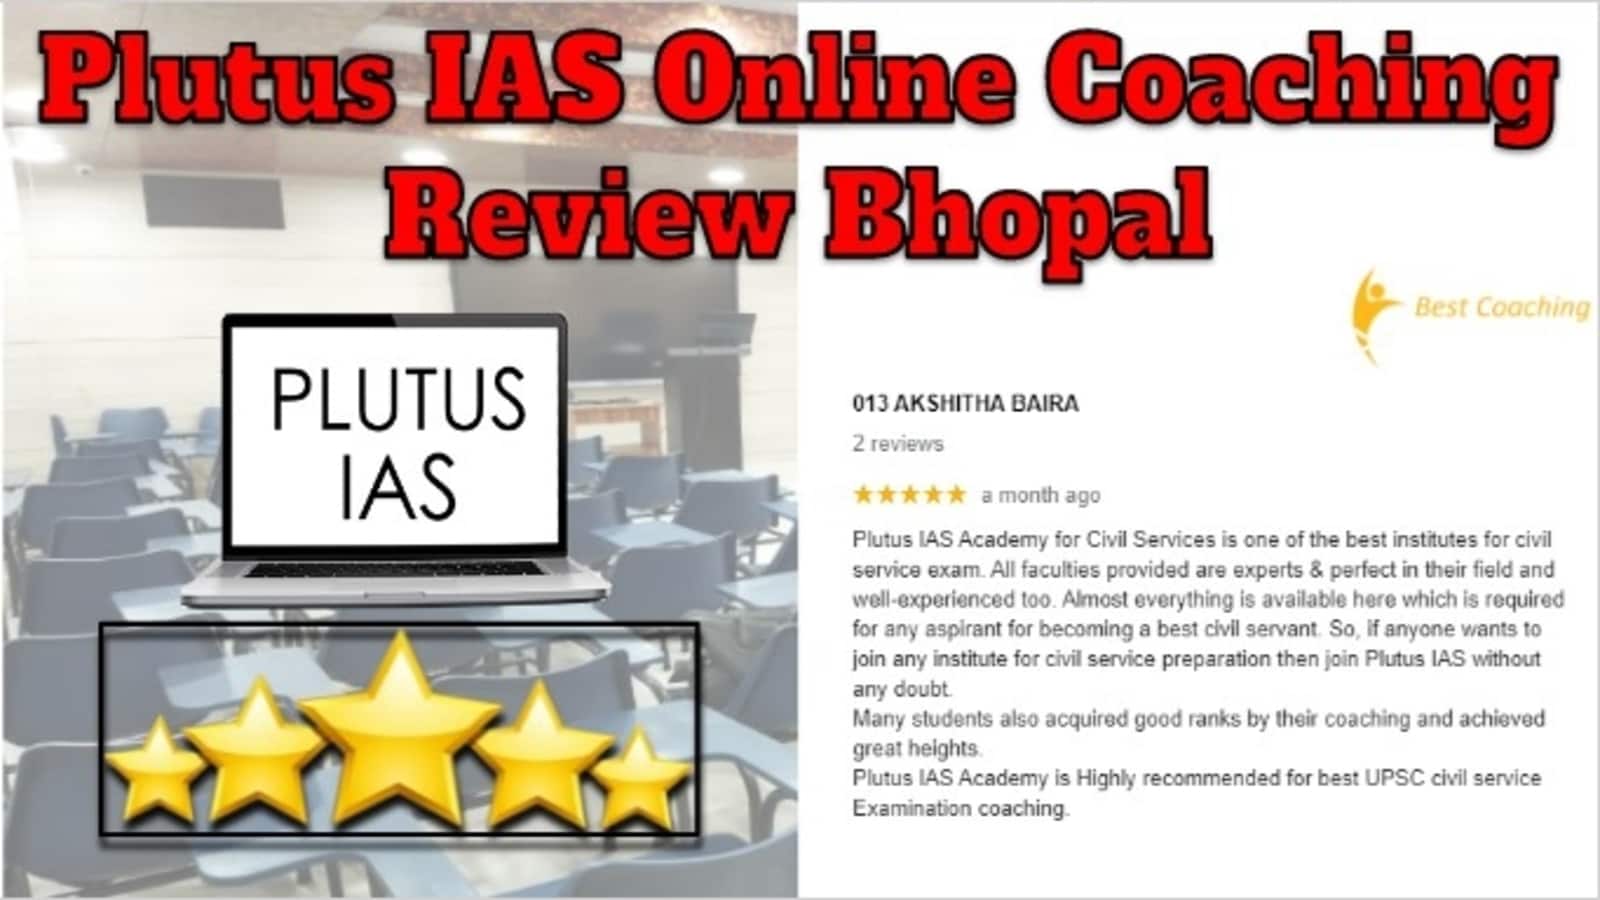 Plutus IAS Online Coaching Review Bhopal